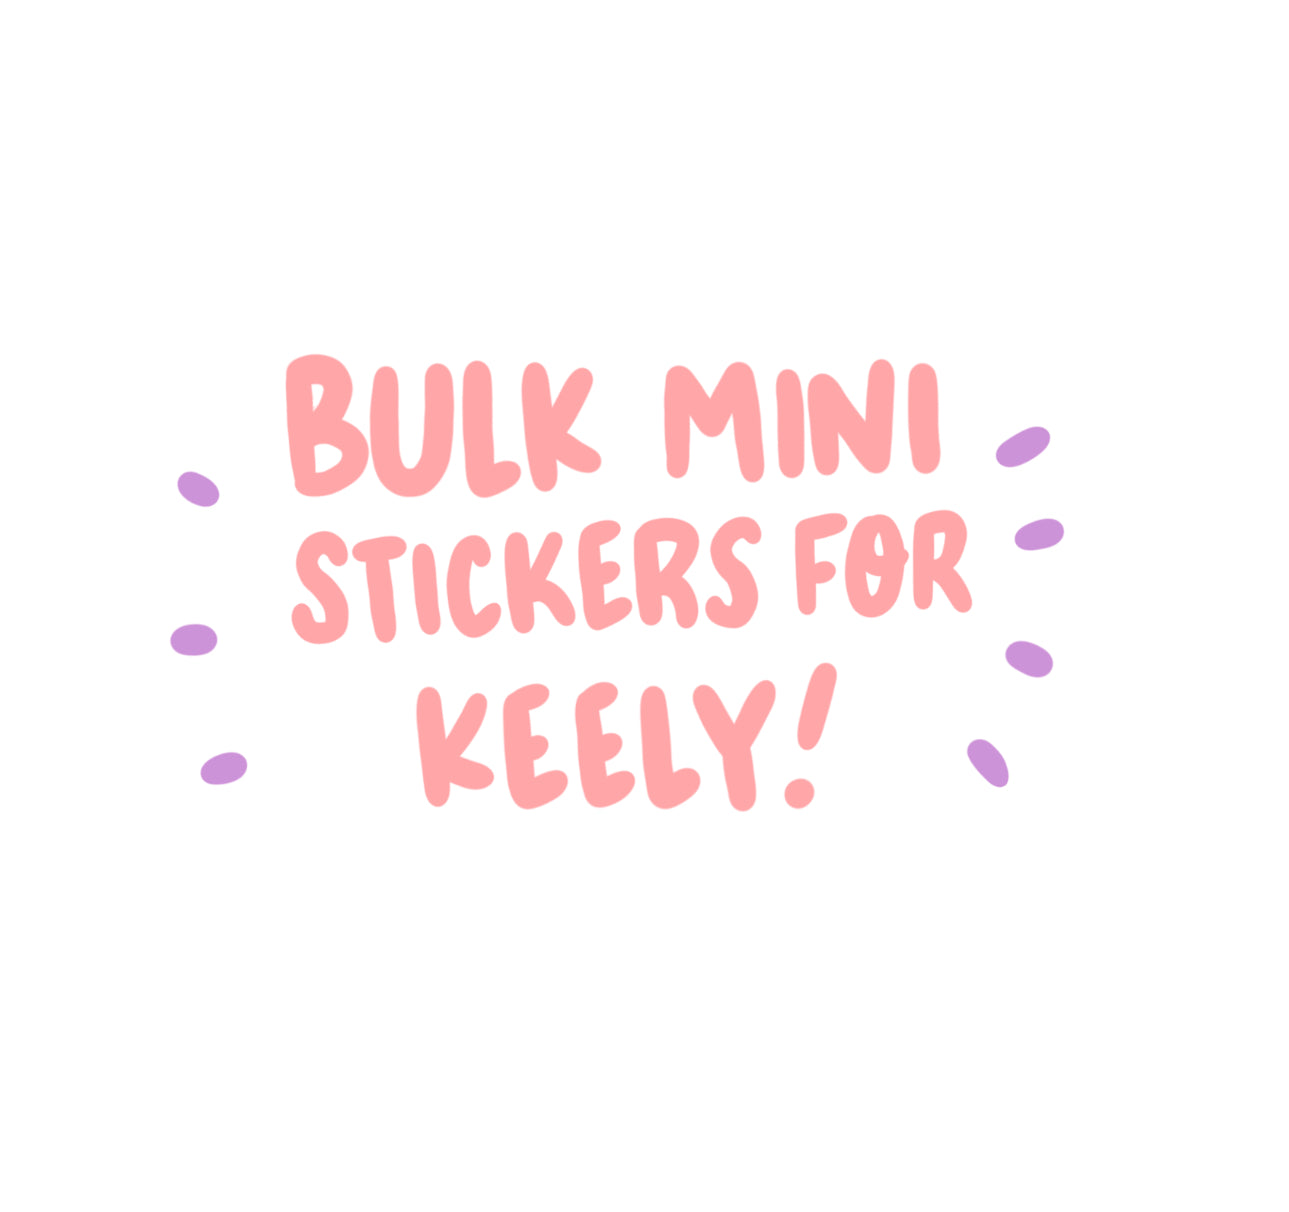 Bulk Mini Stickers for Keely!